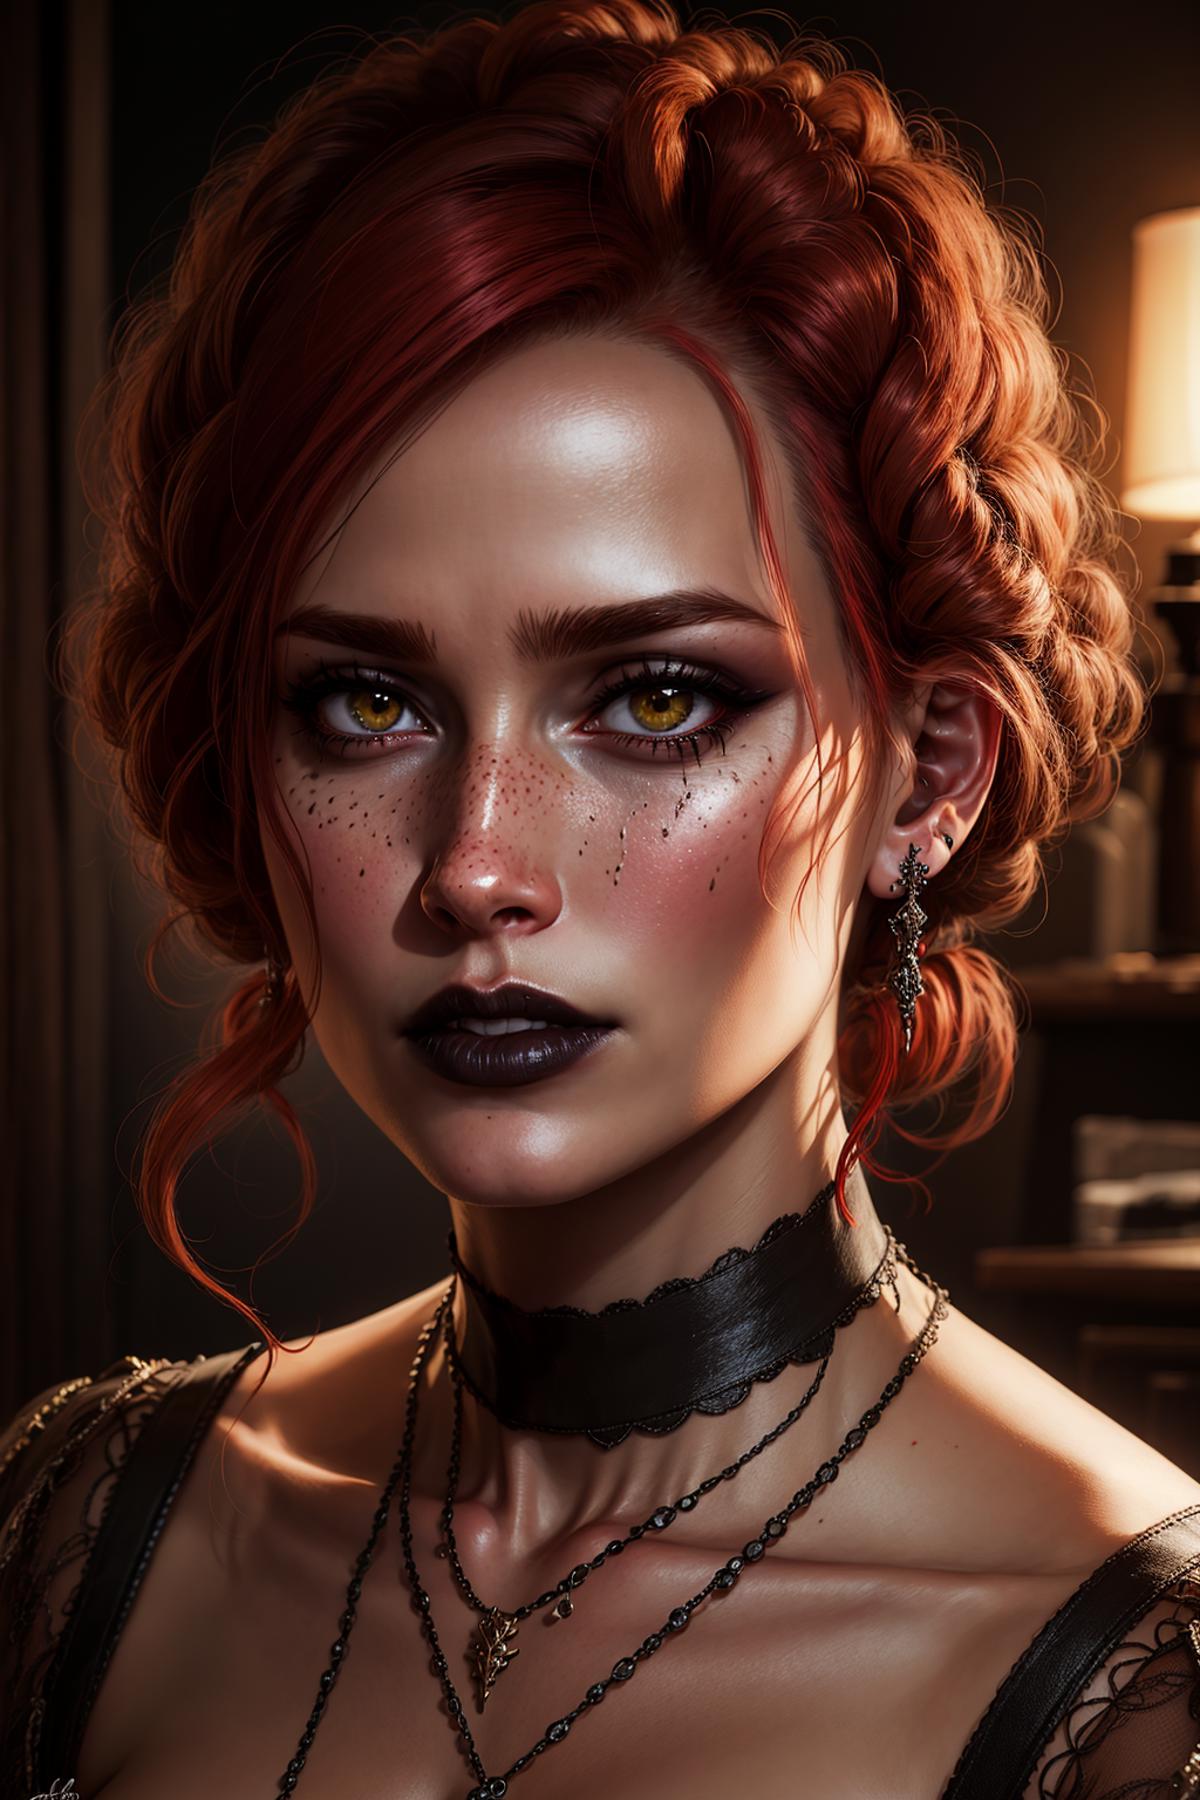 Triss (The Witcher 3) image by LDWorksDervlex